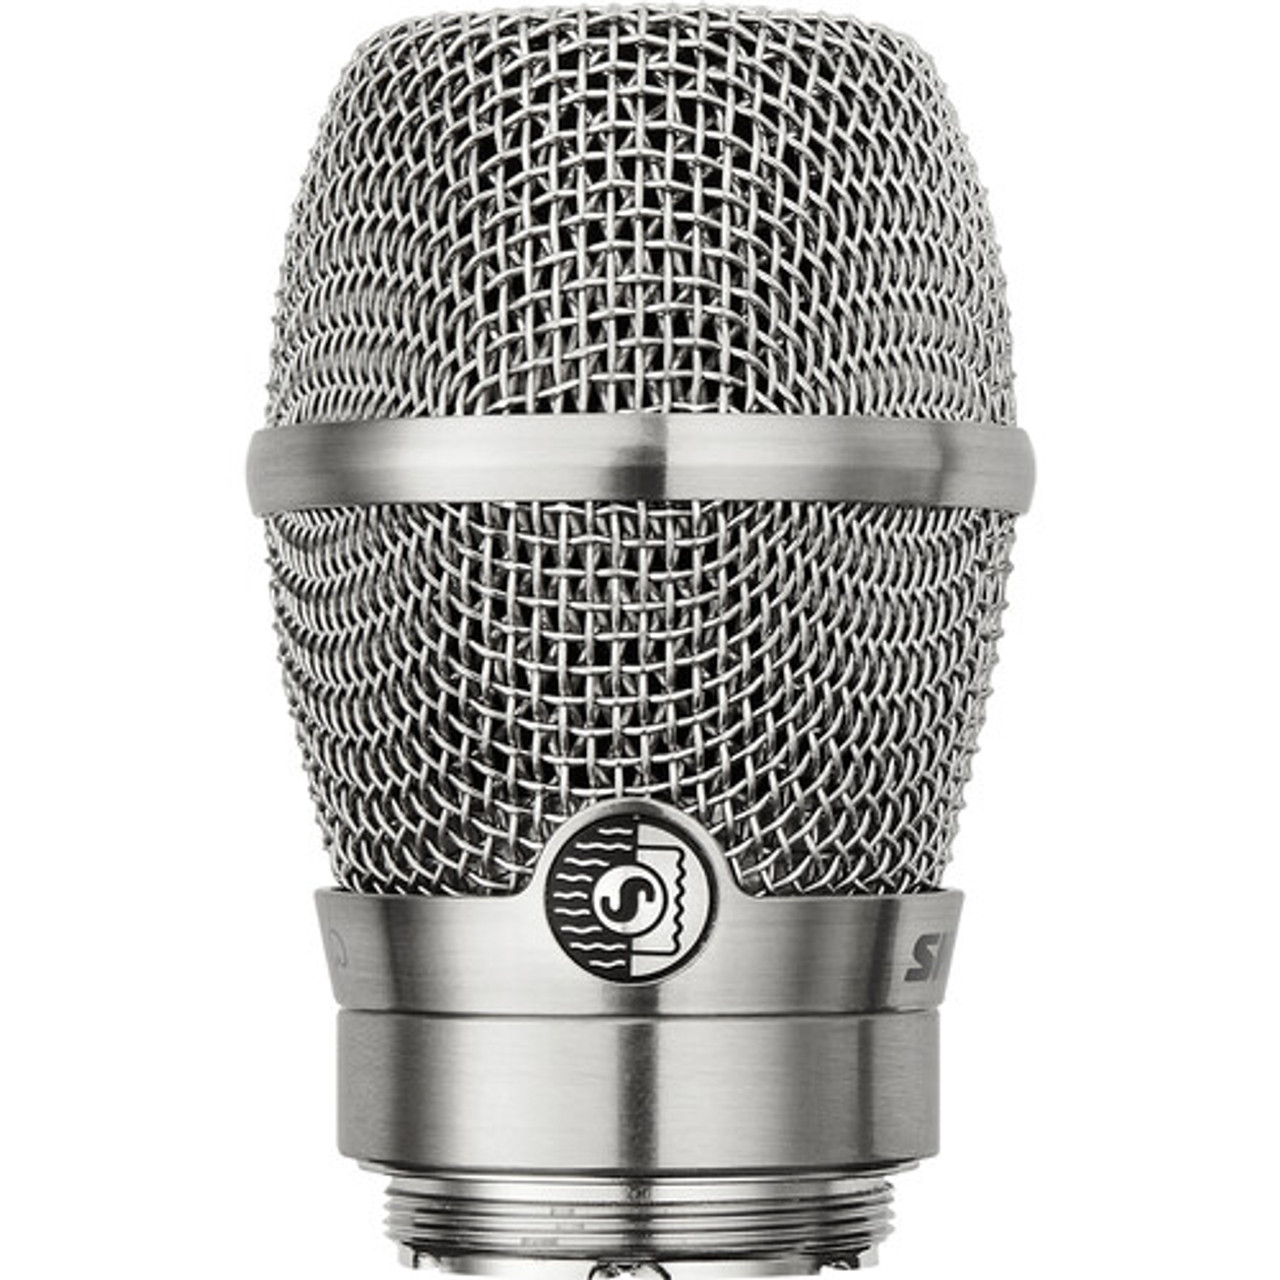 Shure RPW194 KSM11 Cardioid Condenser Capsule for Shure Wireless Microphones (Nickel) (RPW194)